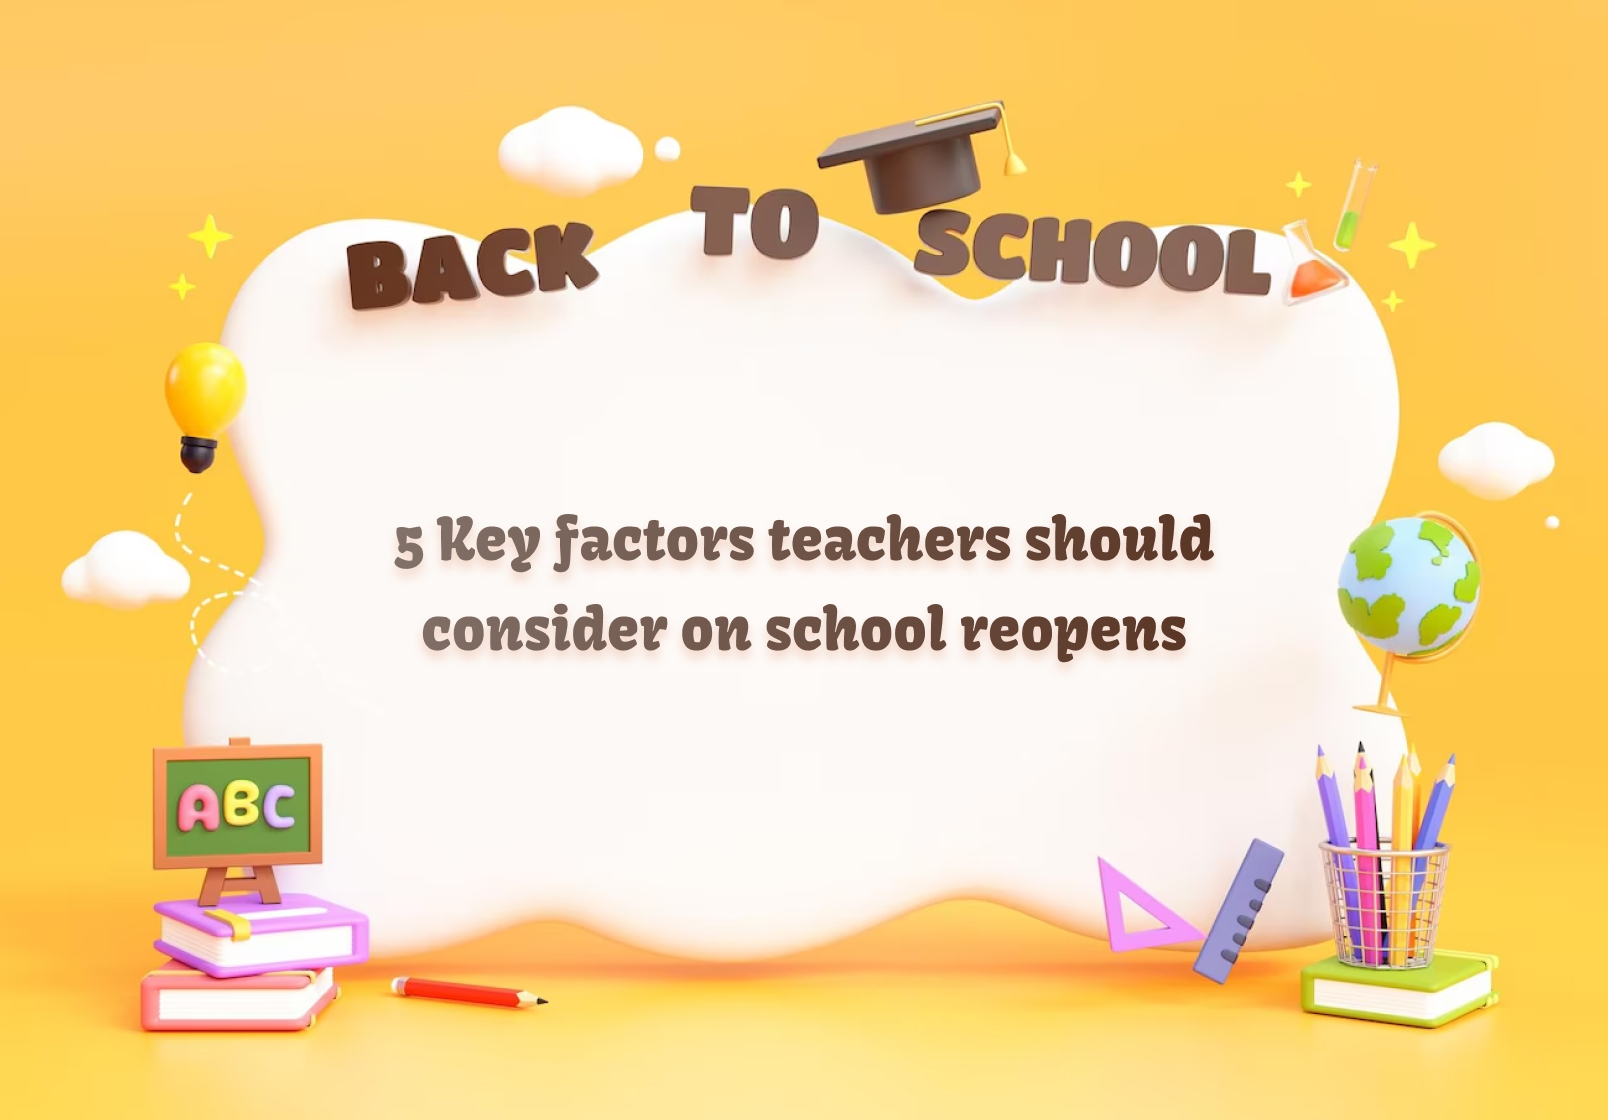 5 Key factors teachers should consider before school reopens